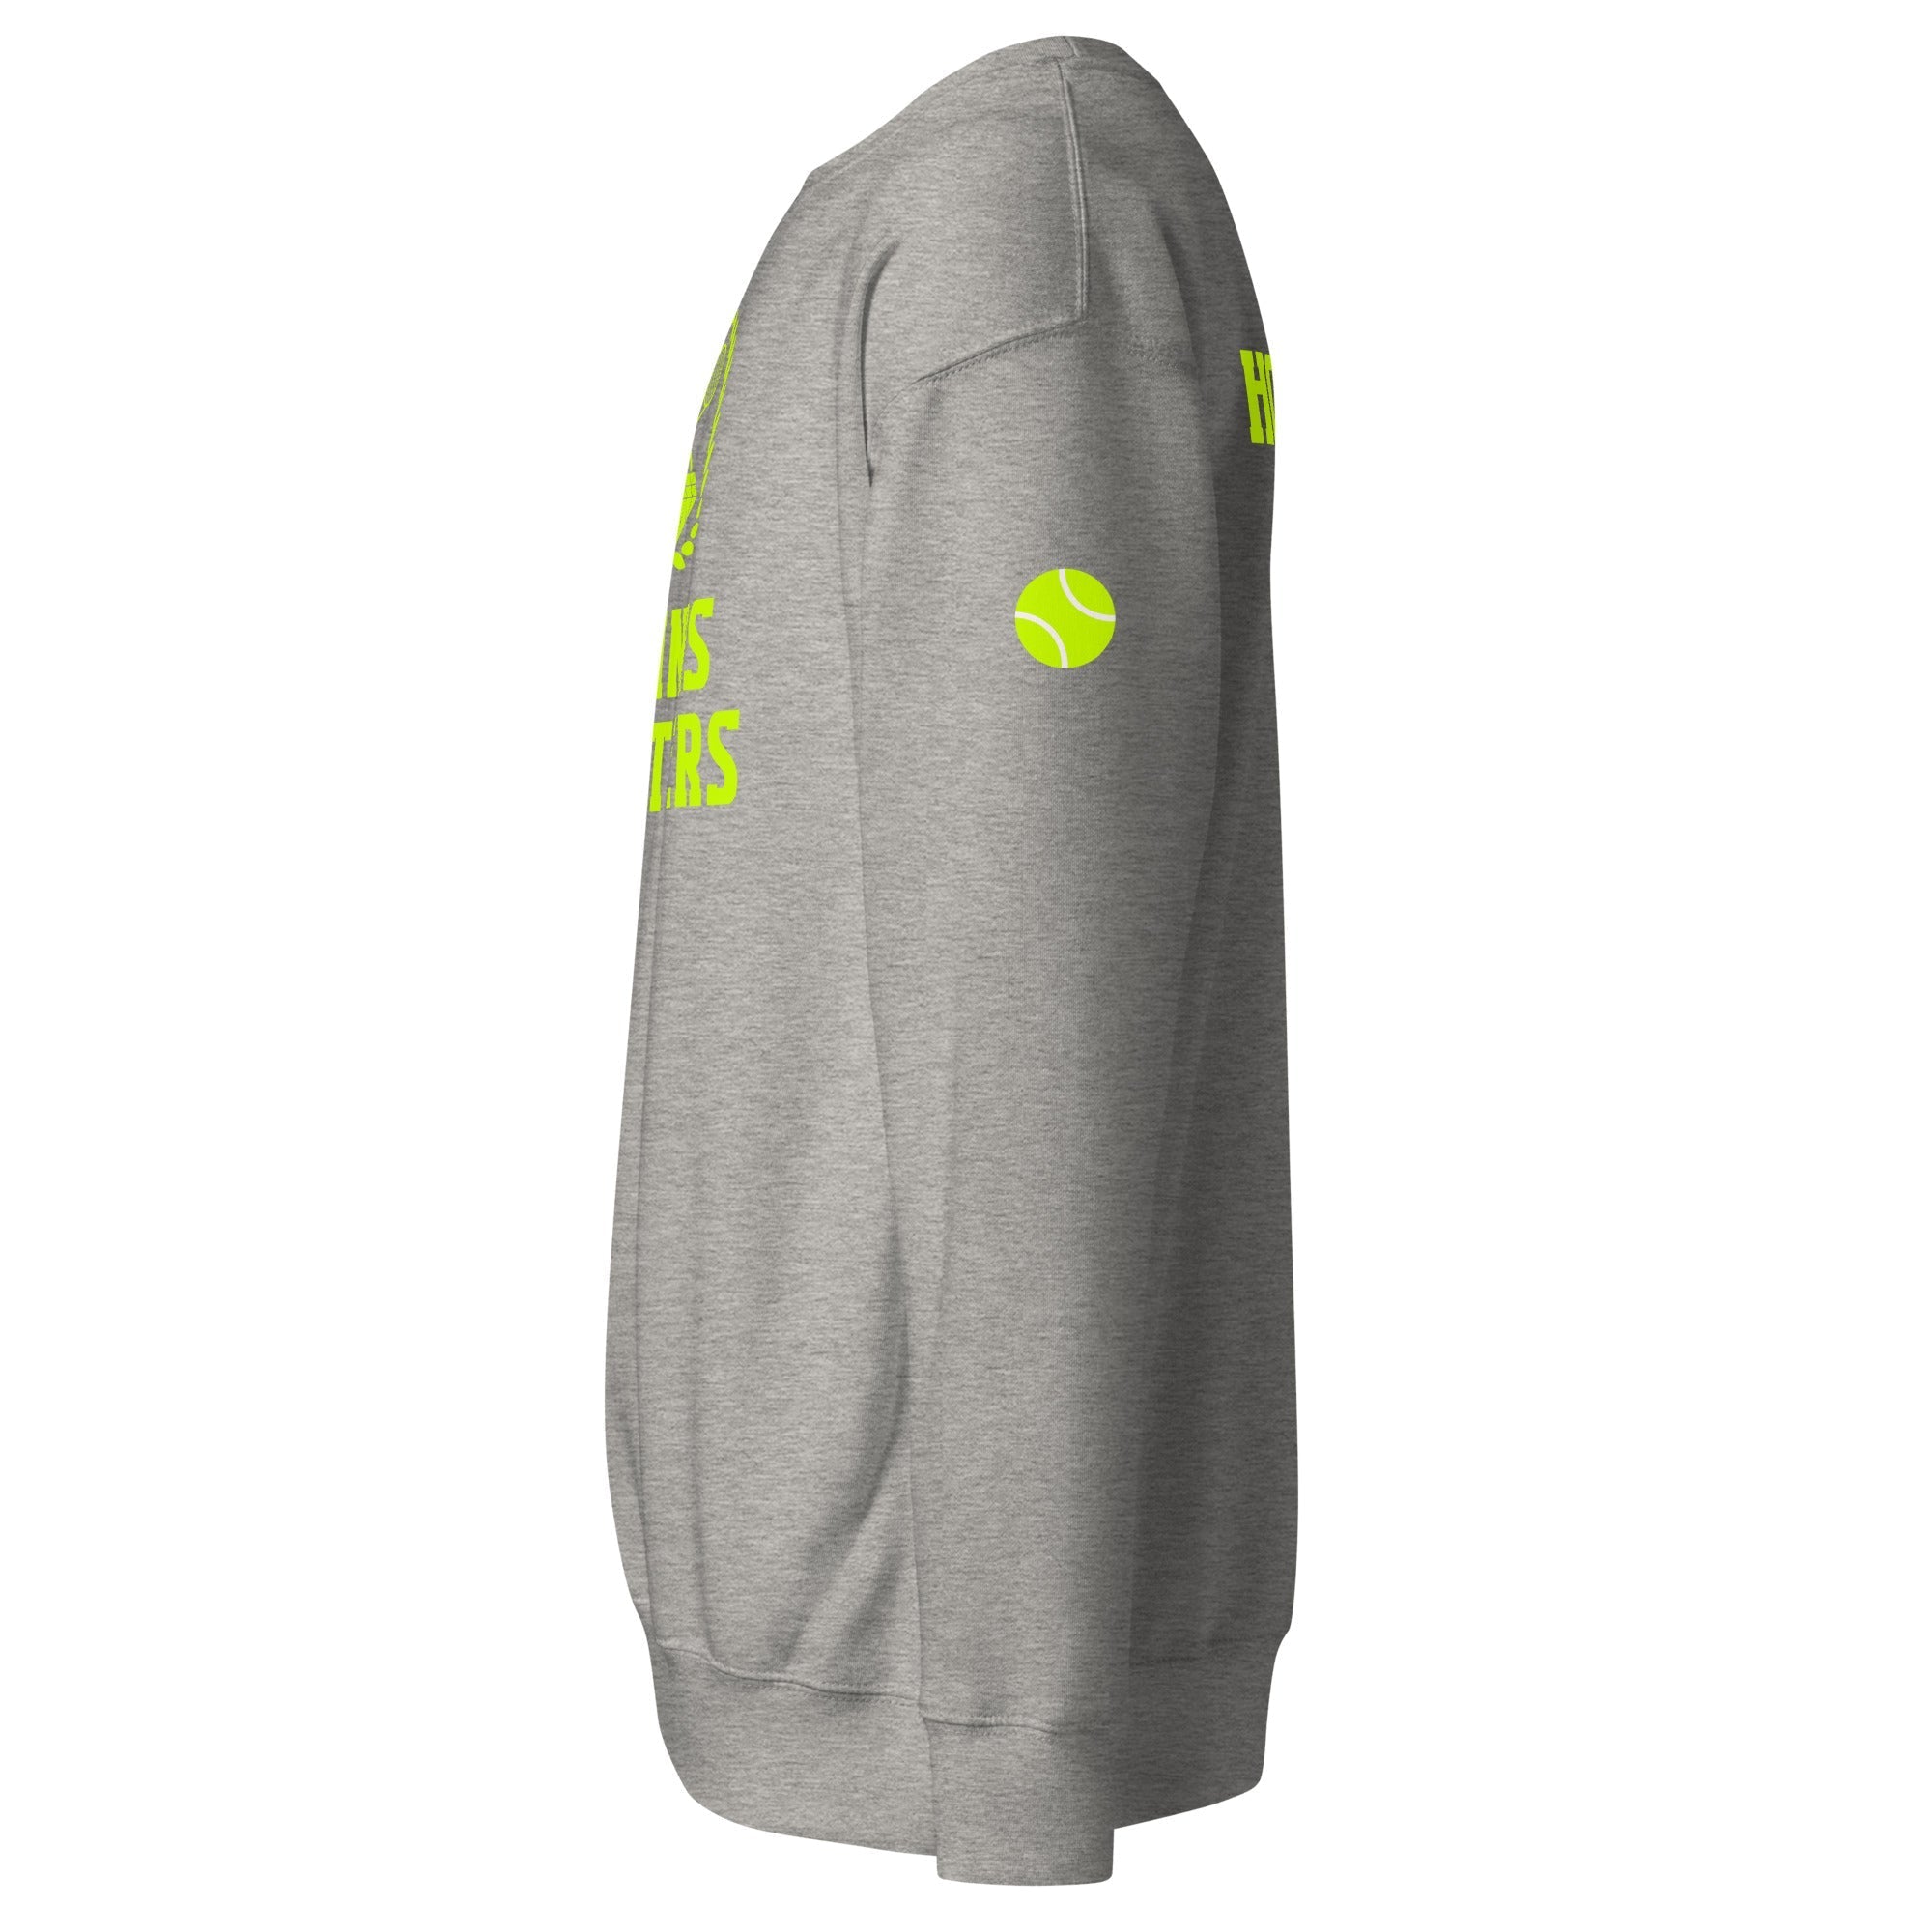 Unisex Premium Sweatshirt - Tennis Masters Houston - GRAPHIC T-SHIRTS